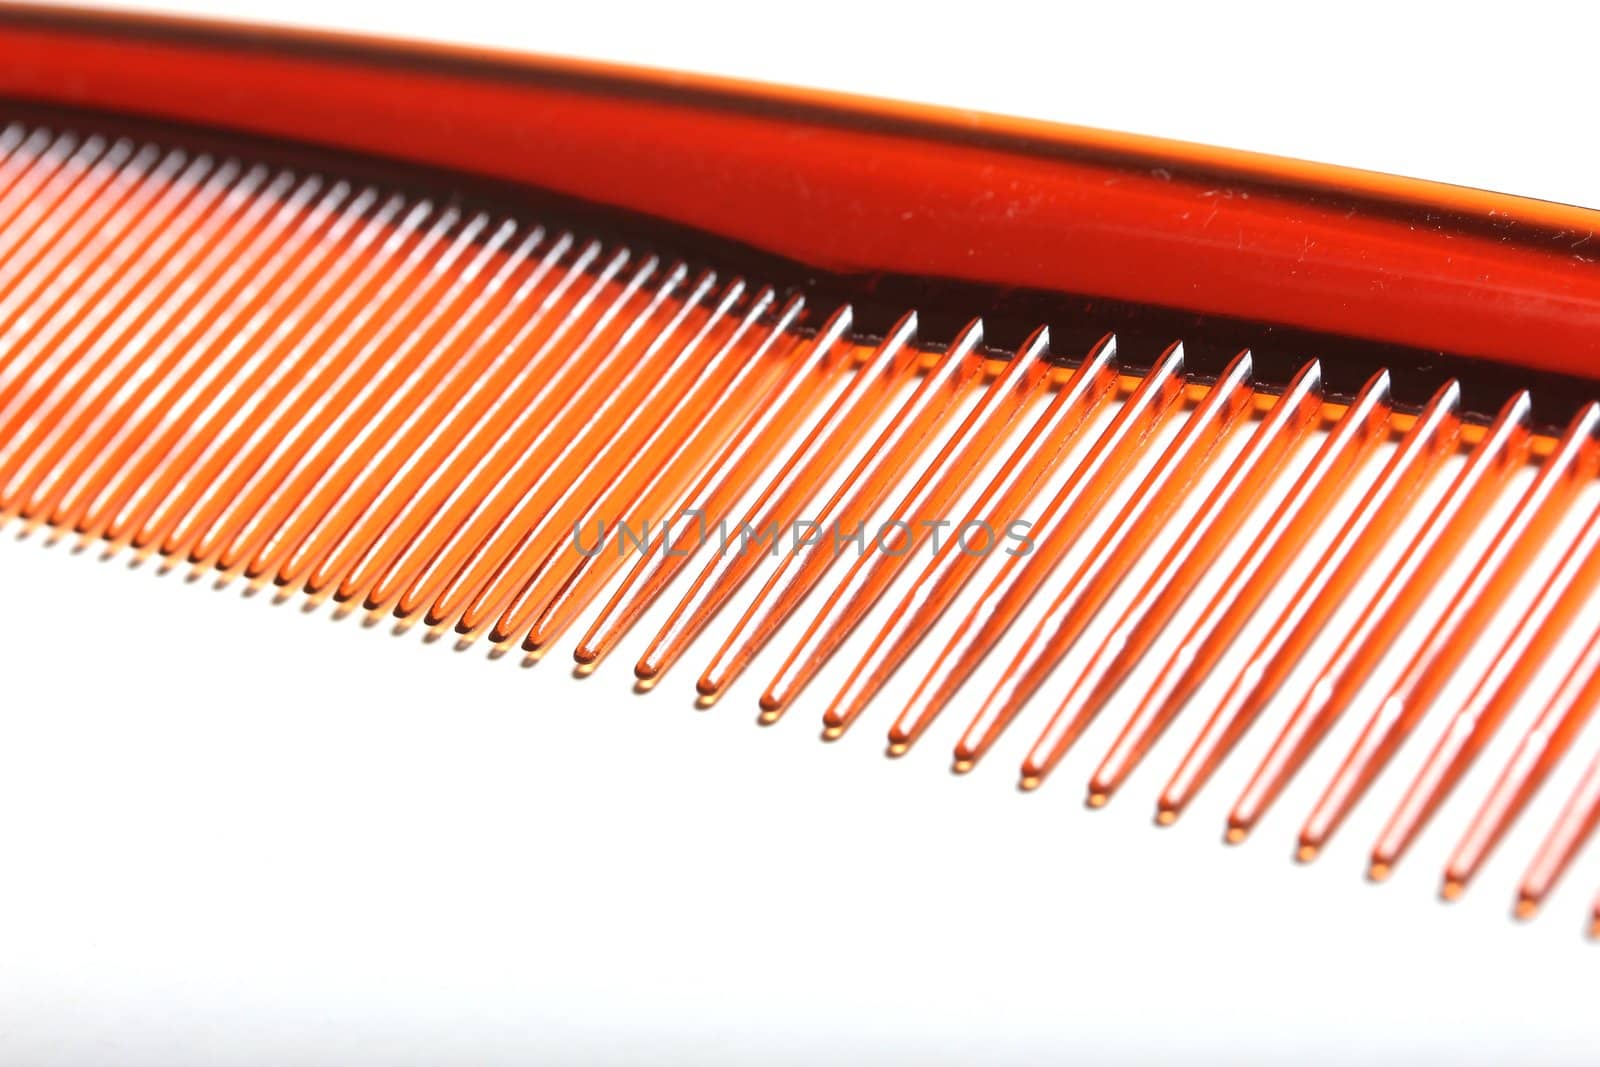 plain isolated plastic comb by Teka77